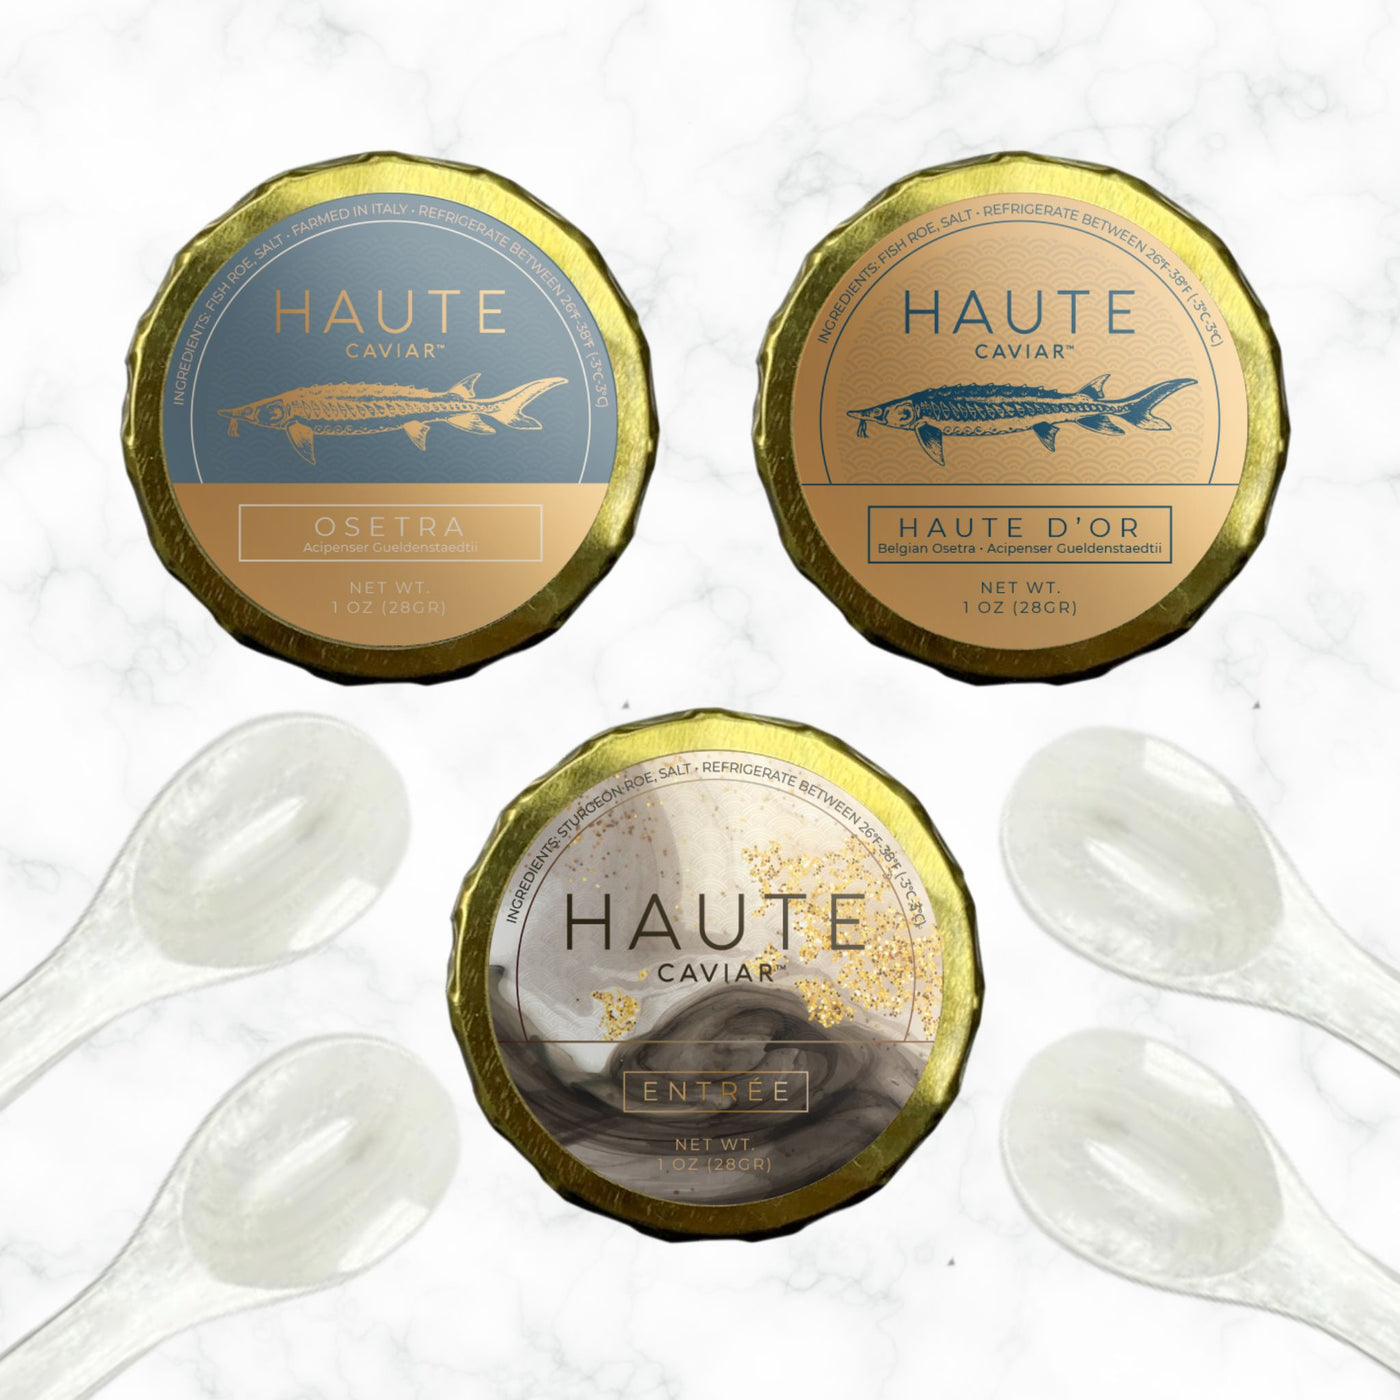 Haute Caviar Chefs Kit - Haute Caviar Company 